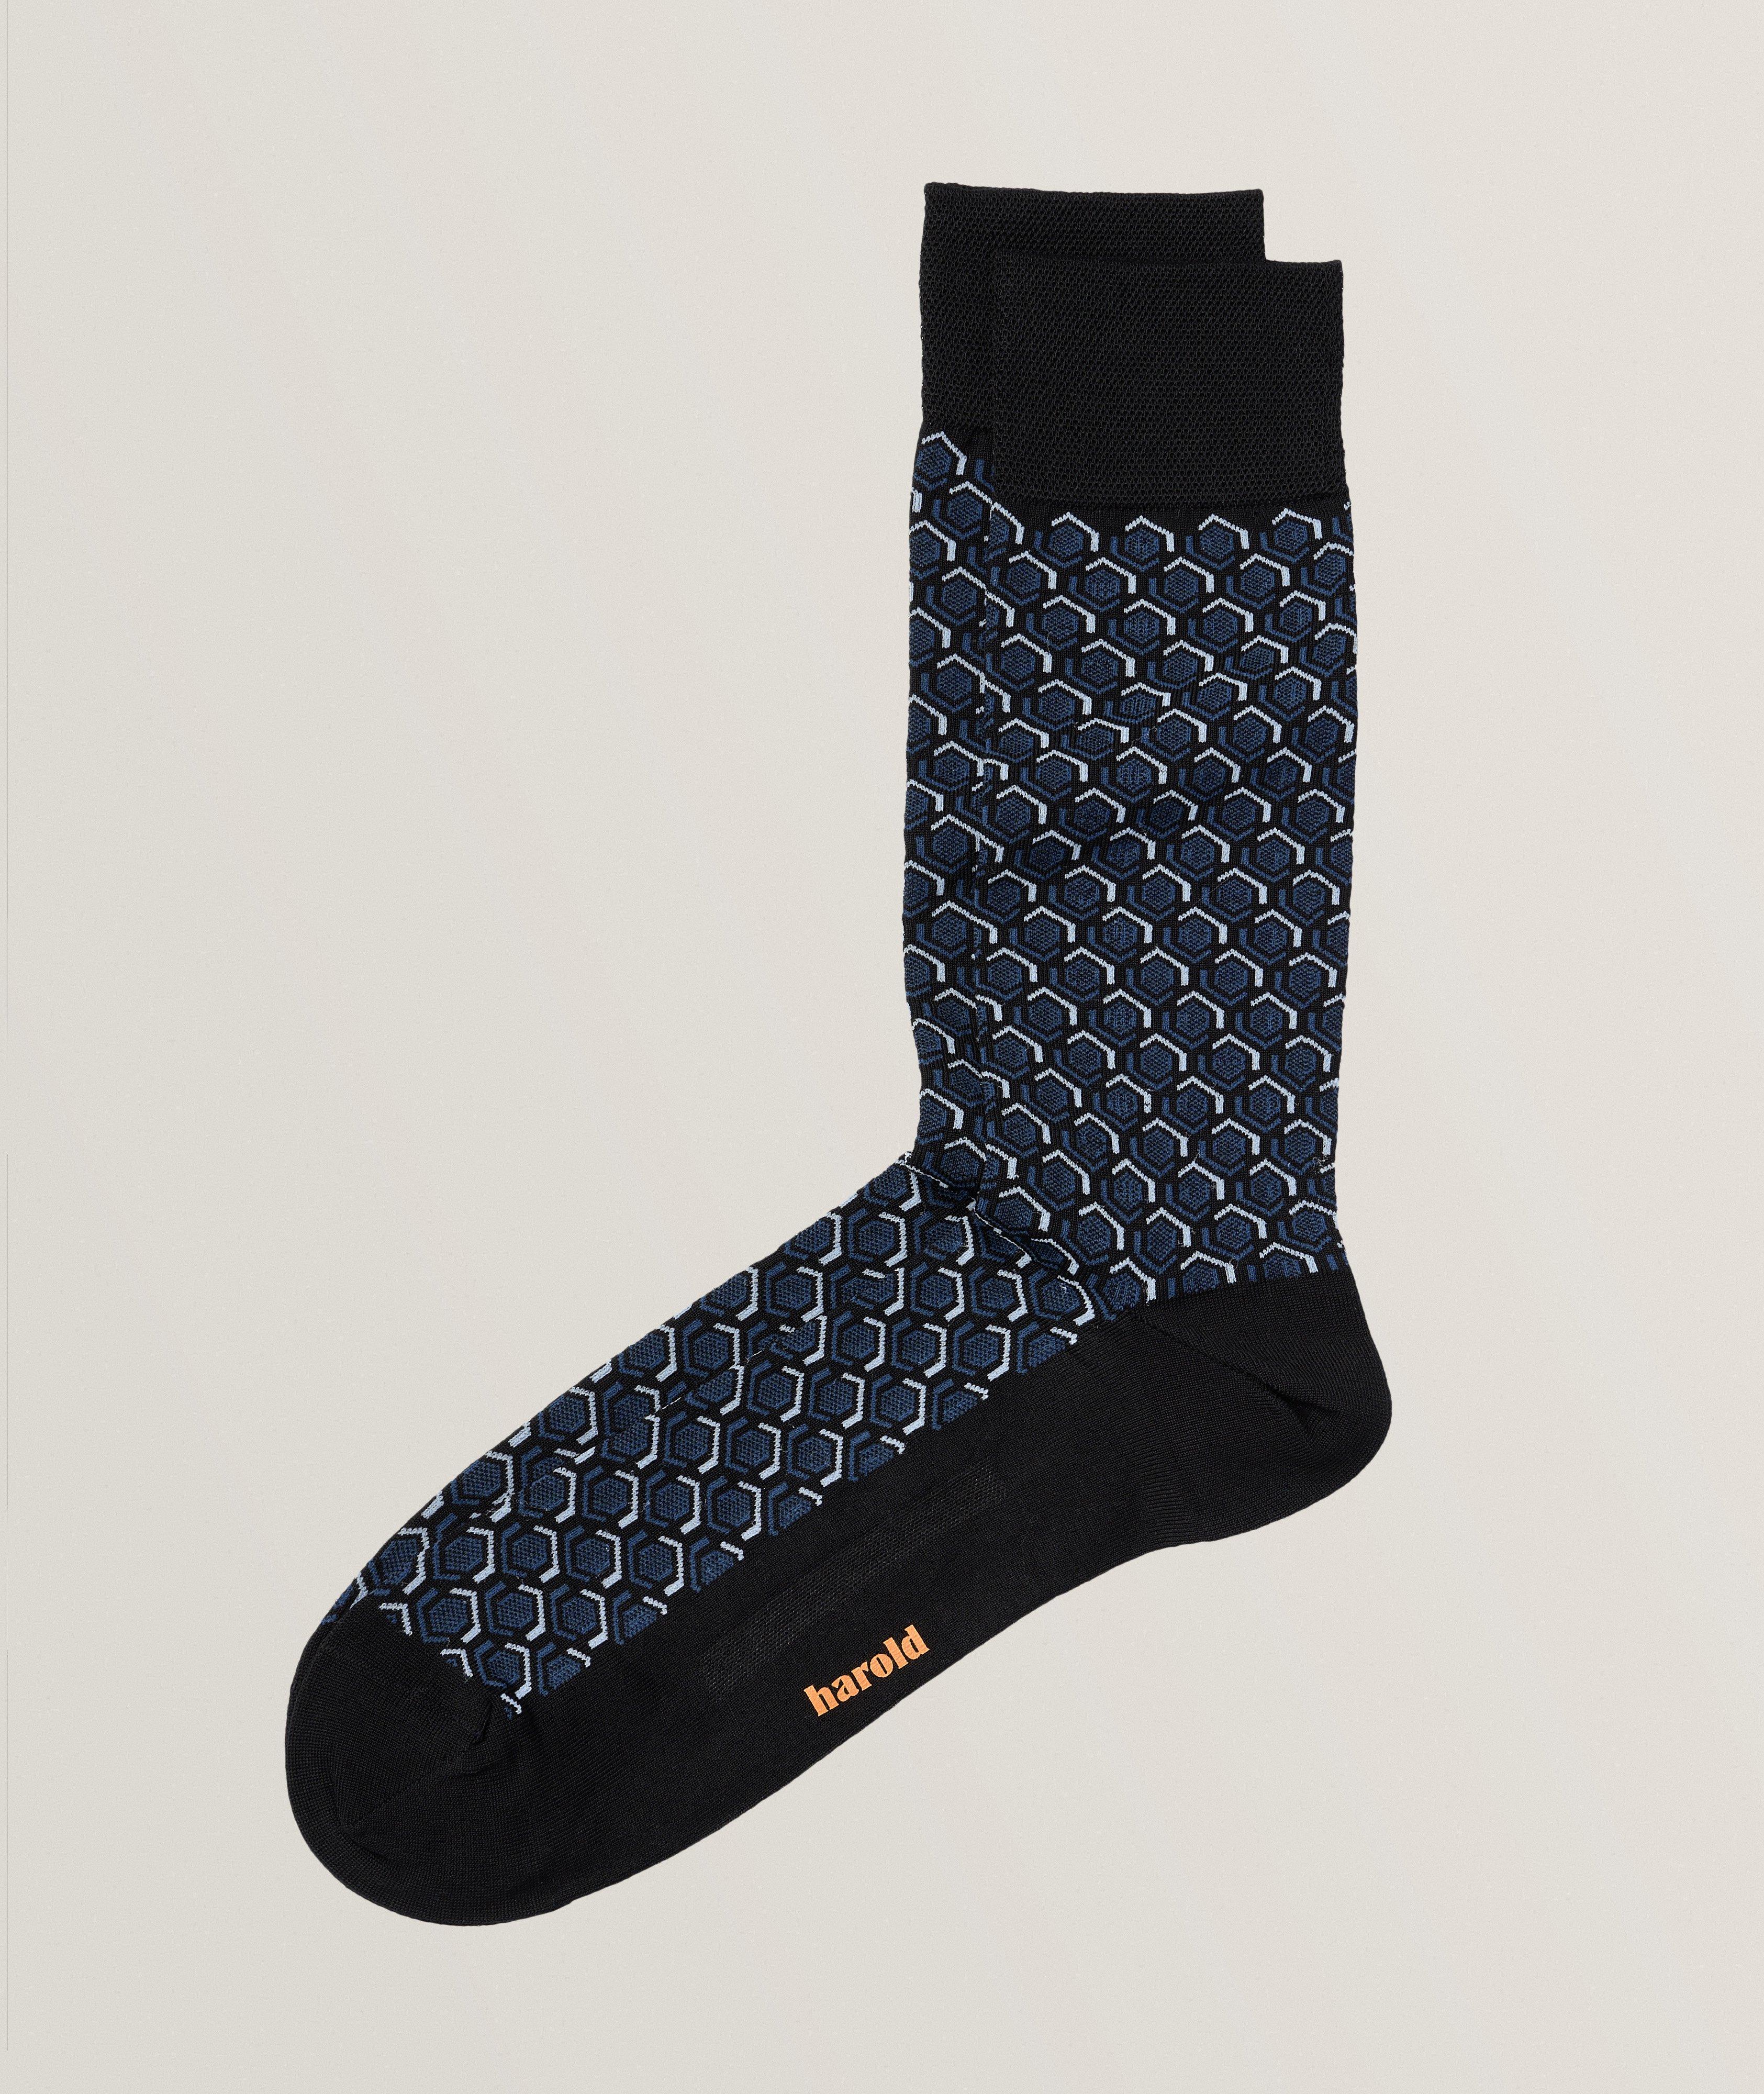 Hexagonal Mercerized Stretch-Cotton Socks image 0